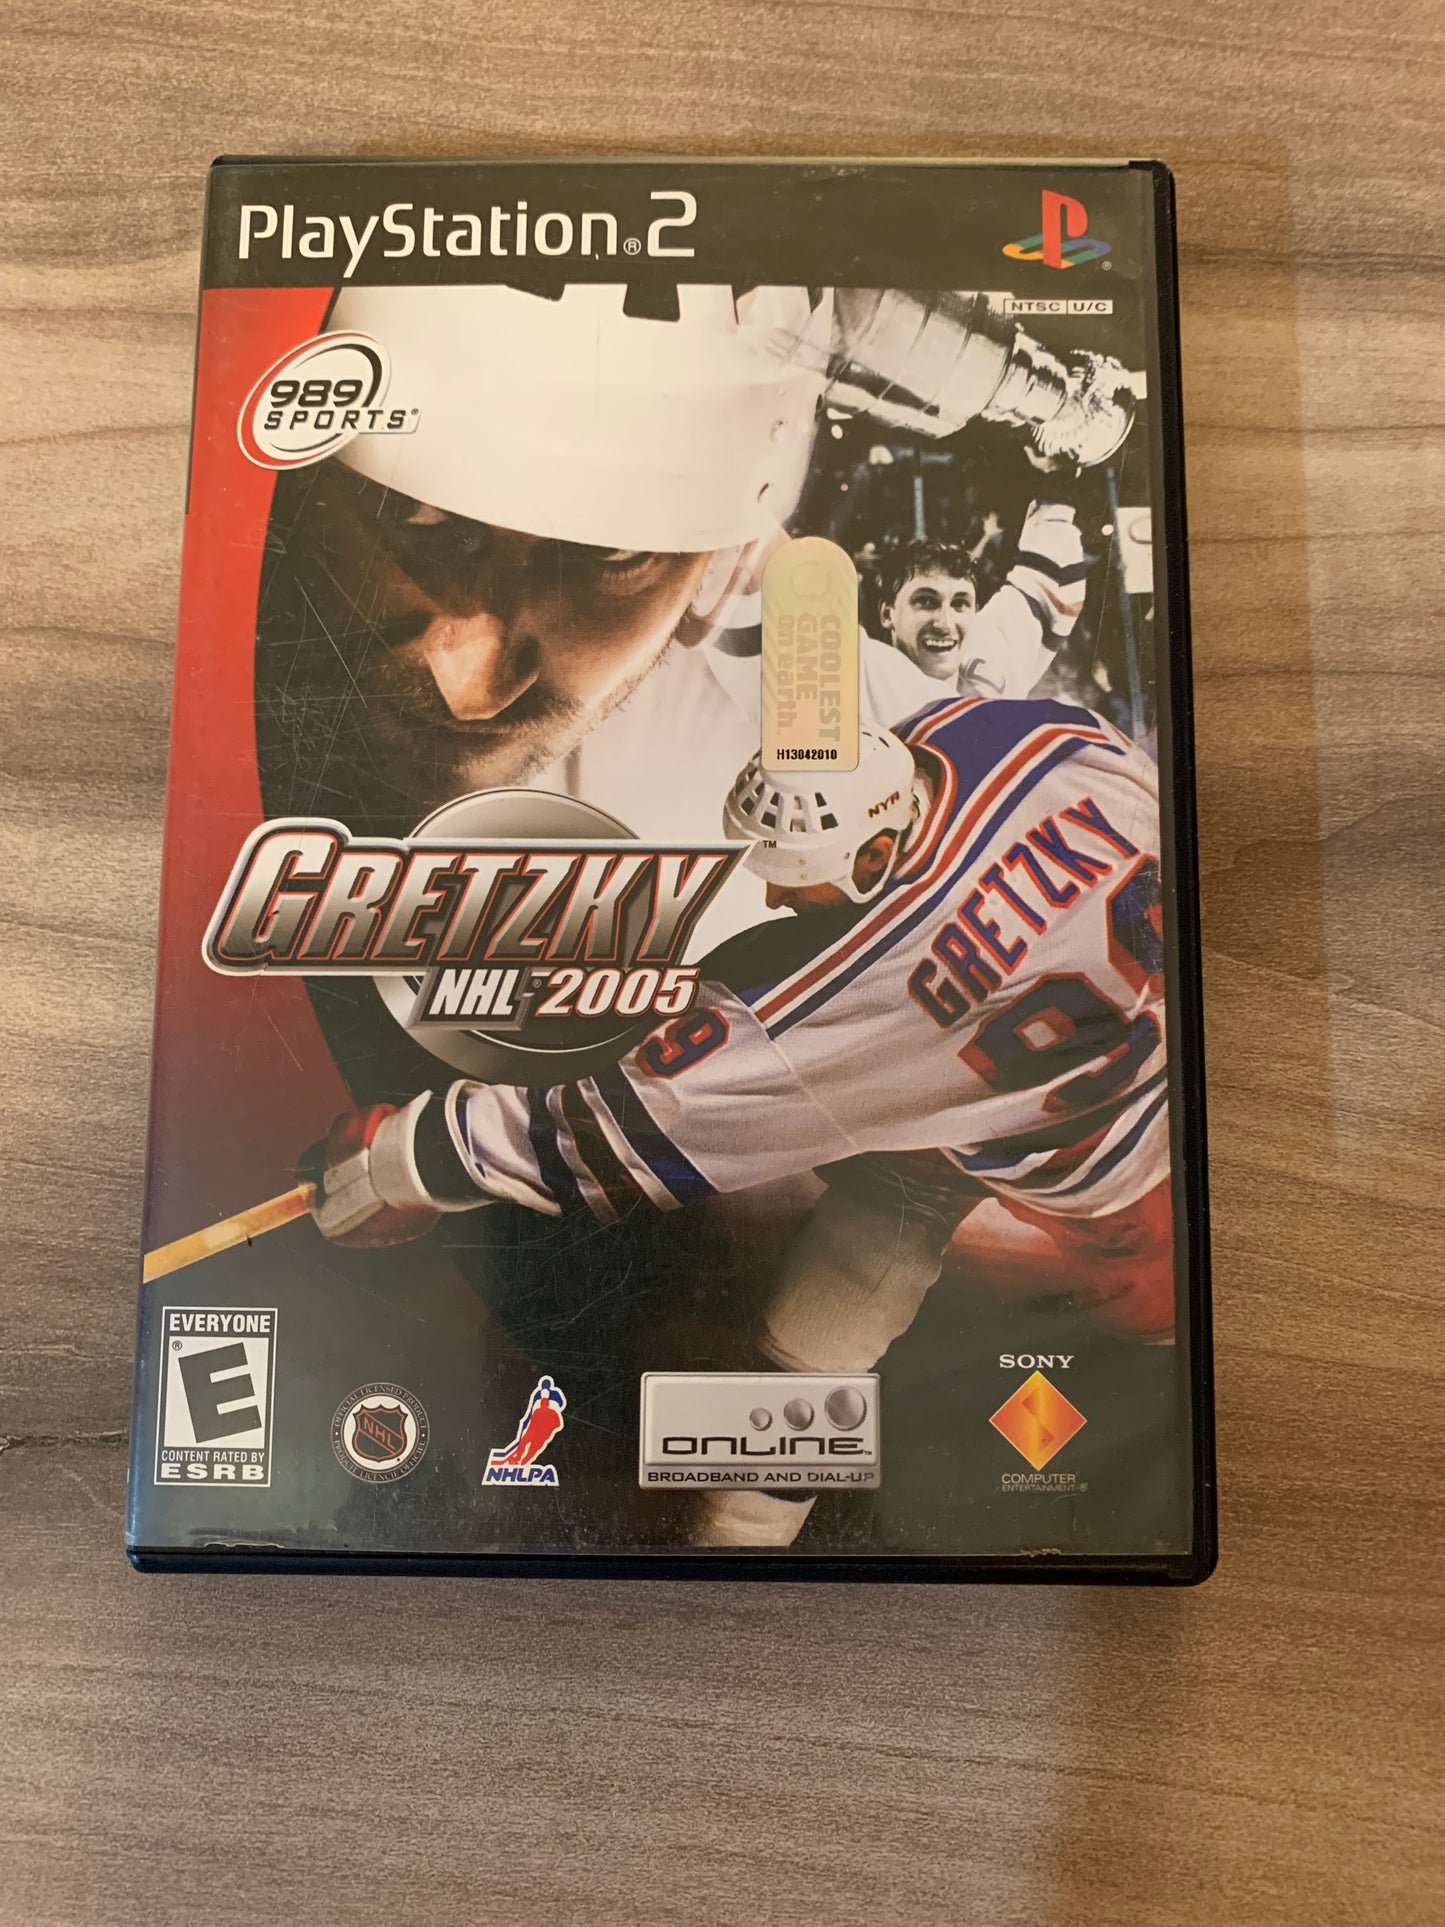 SONY PLAYSTATiON 2 [PS2] | GRETZKY NHL 2005